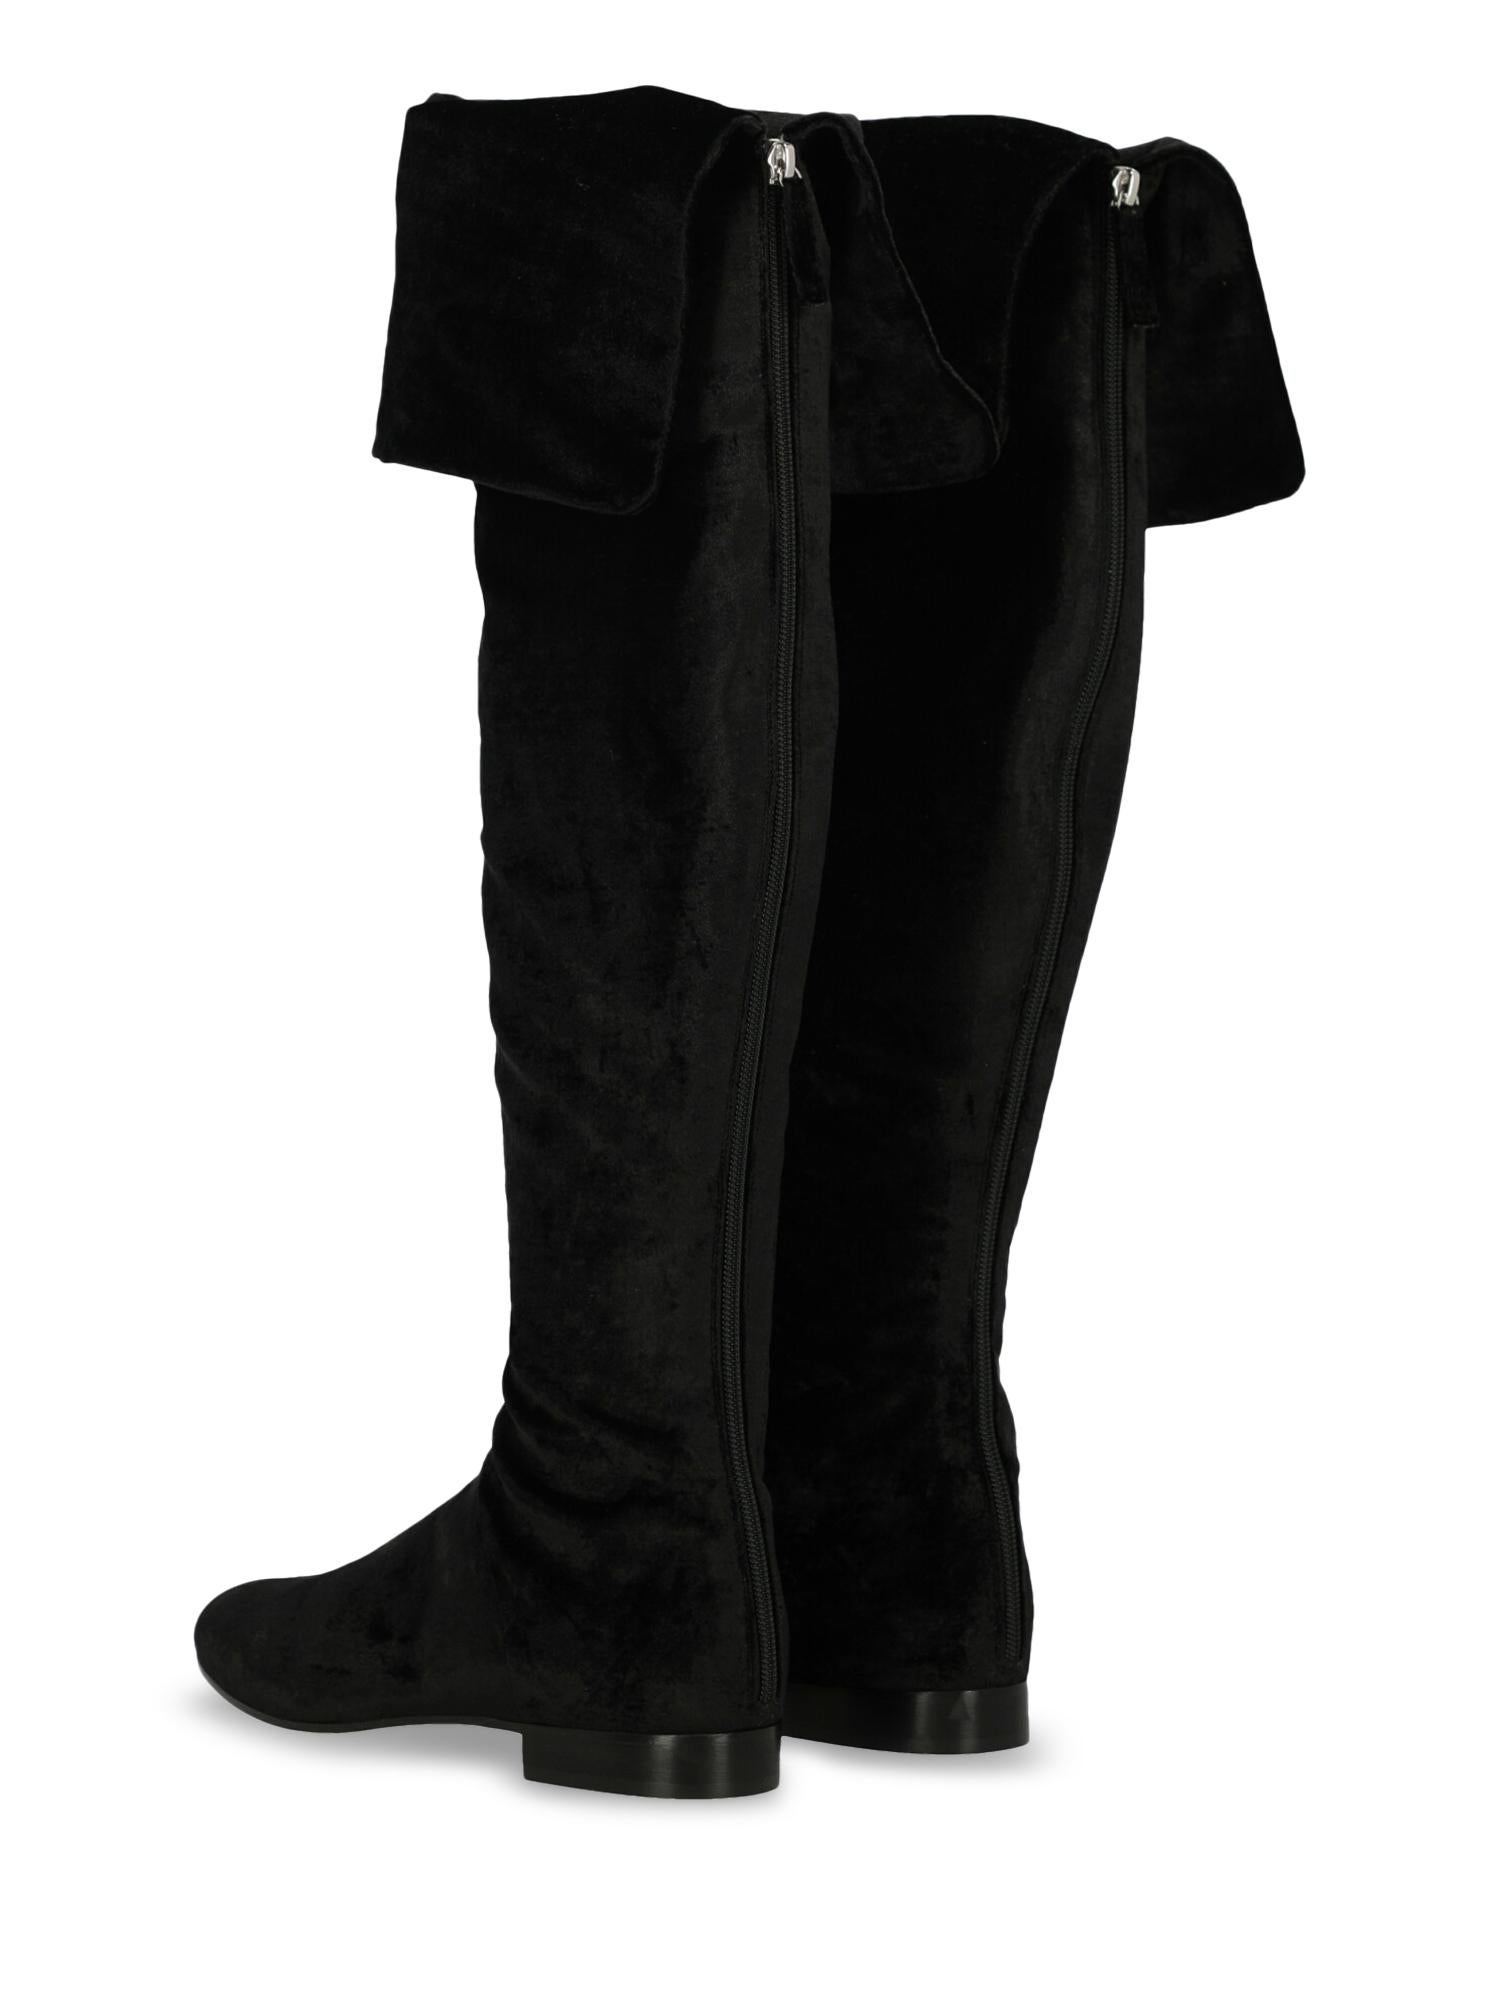 Women's Alberta Ferretti Woman Boots Black Fabric IT 35 For Sale